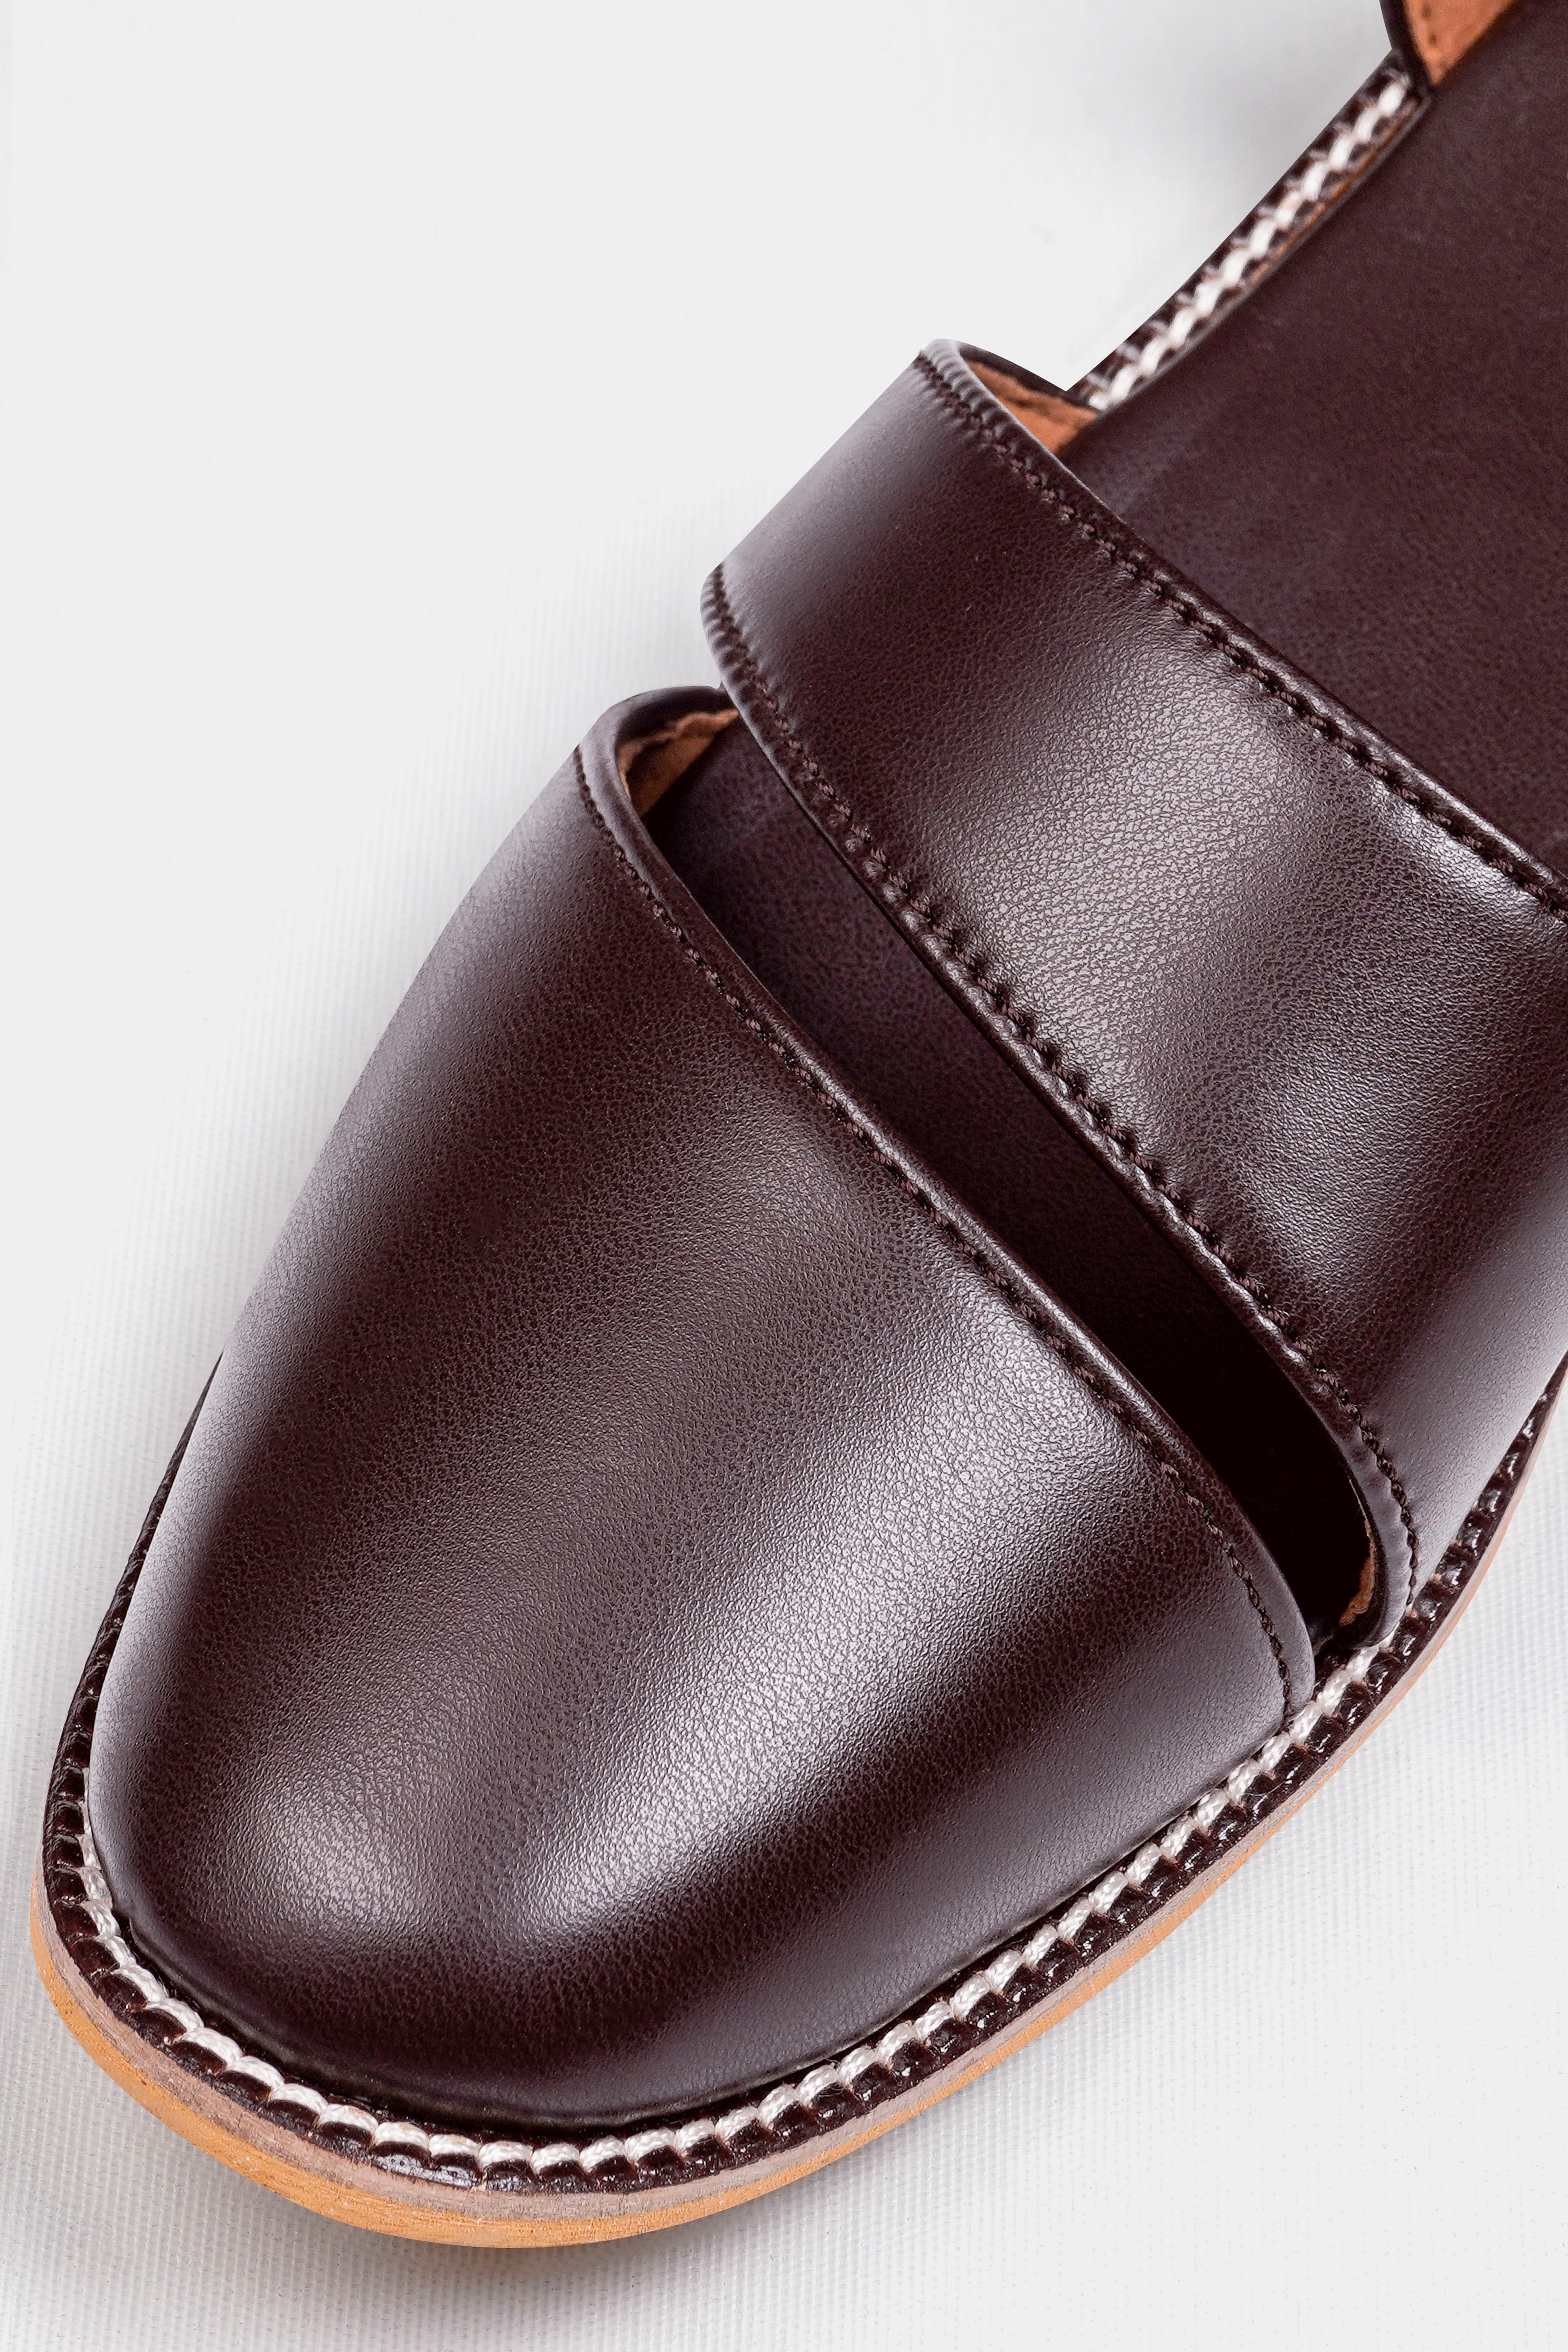 Rainbow Men's 302Alts Dark Brown Leather Sandals size XXL (12 - 13.5)Free  SHIP | eBay